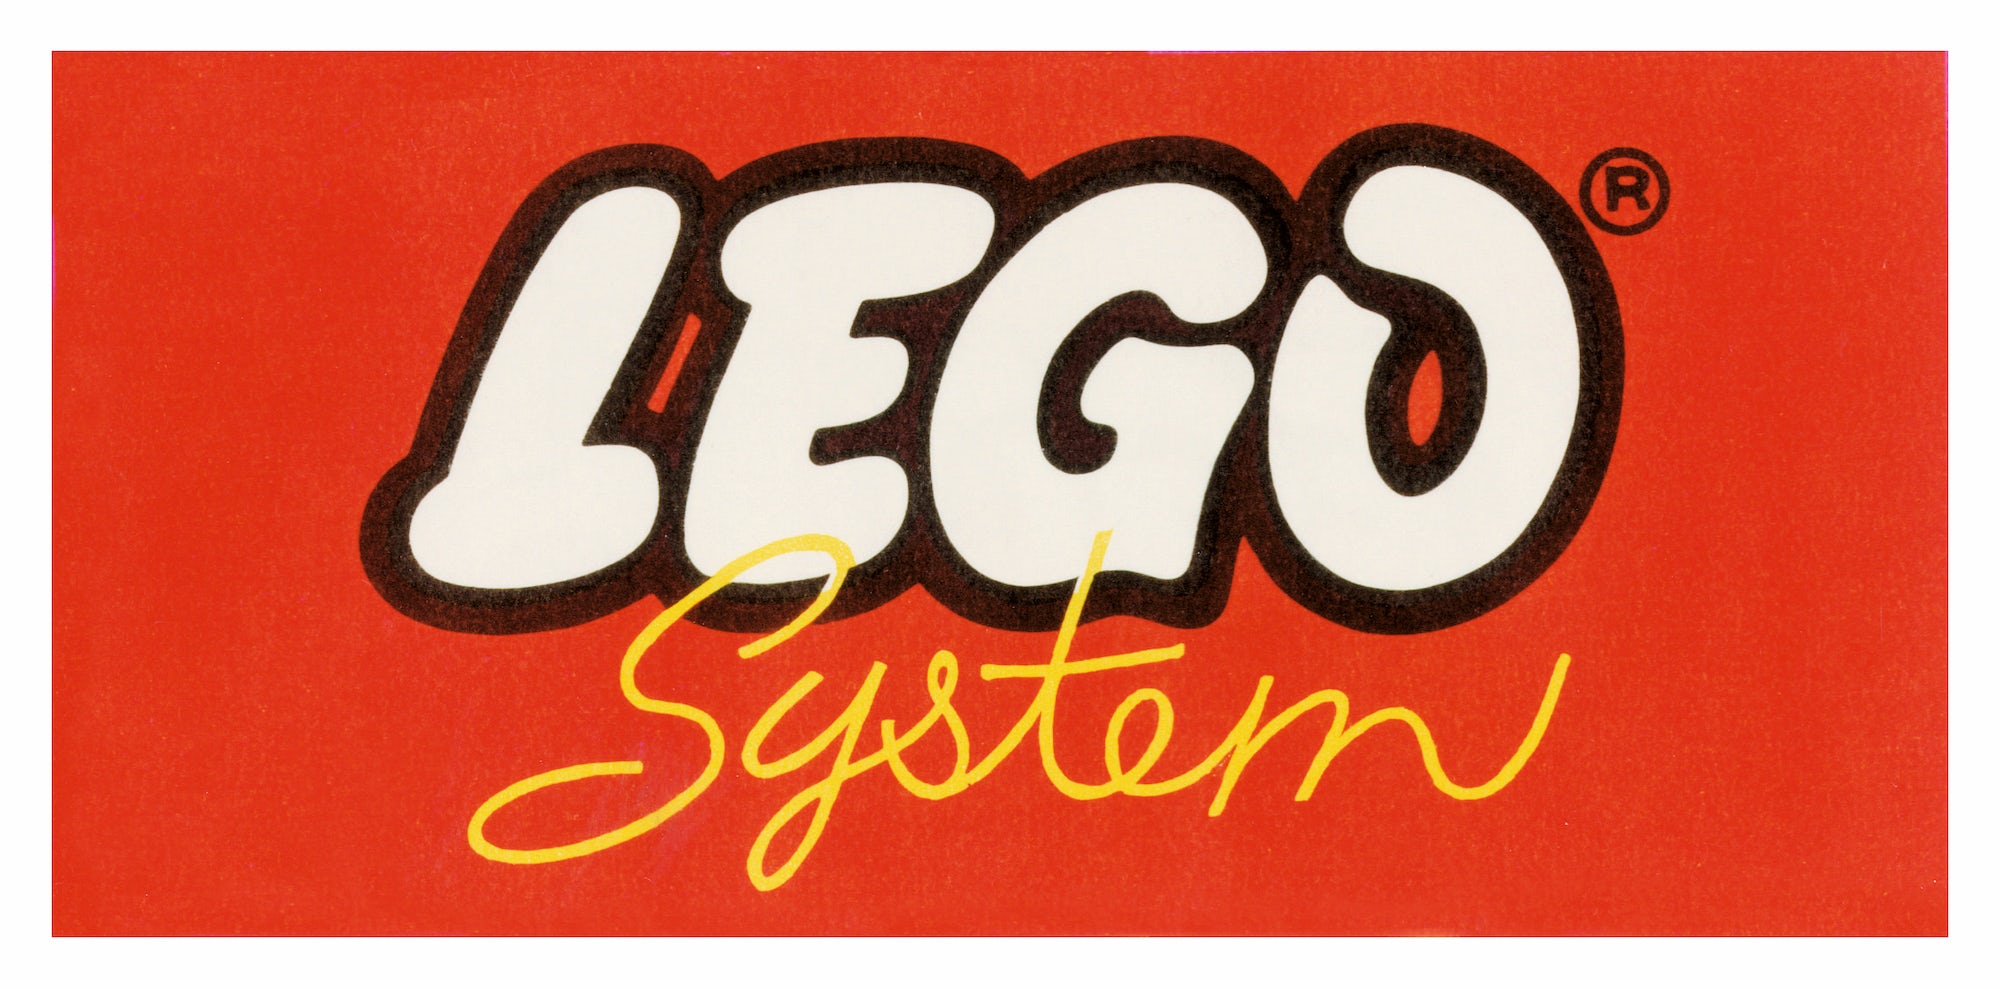 Lego logo 1958